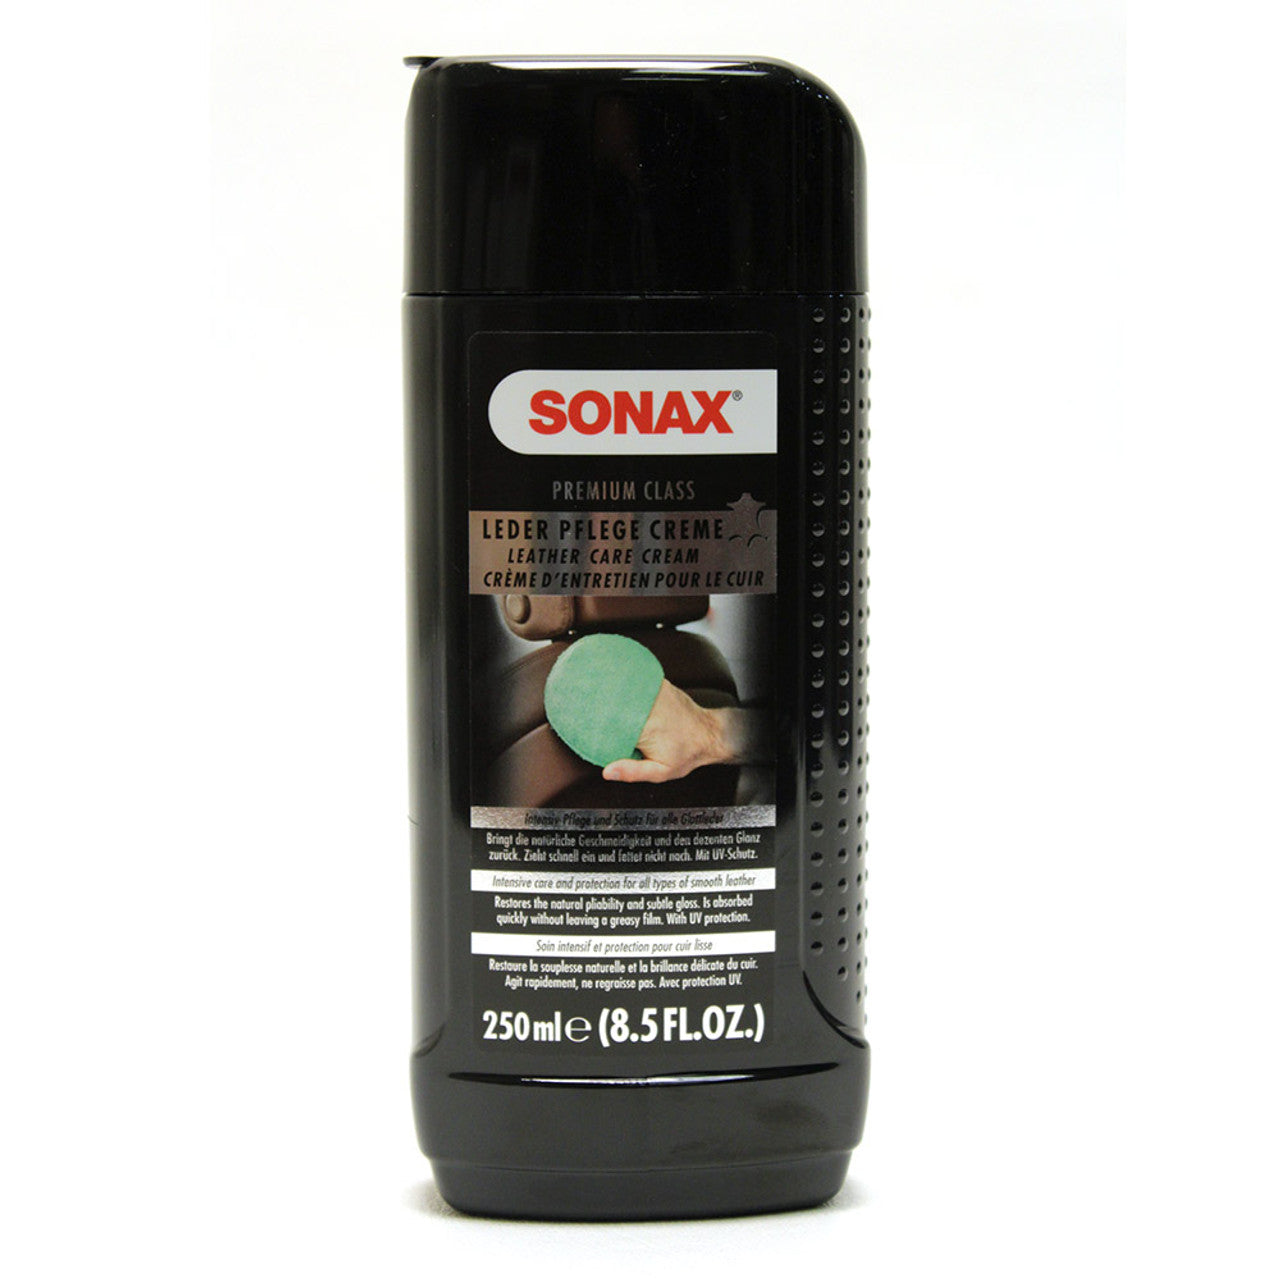 Sonax Premium Class Leather Care Cream - 250ml - Sierra Madre Collection